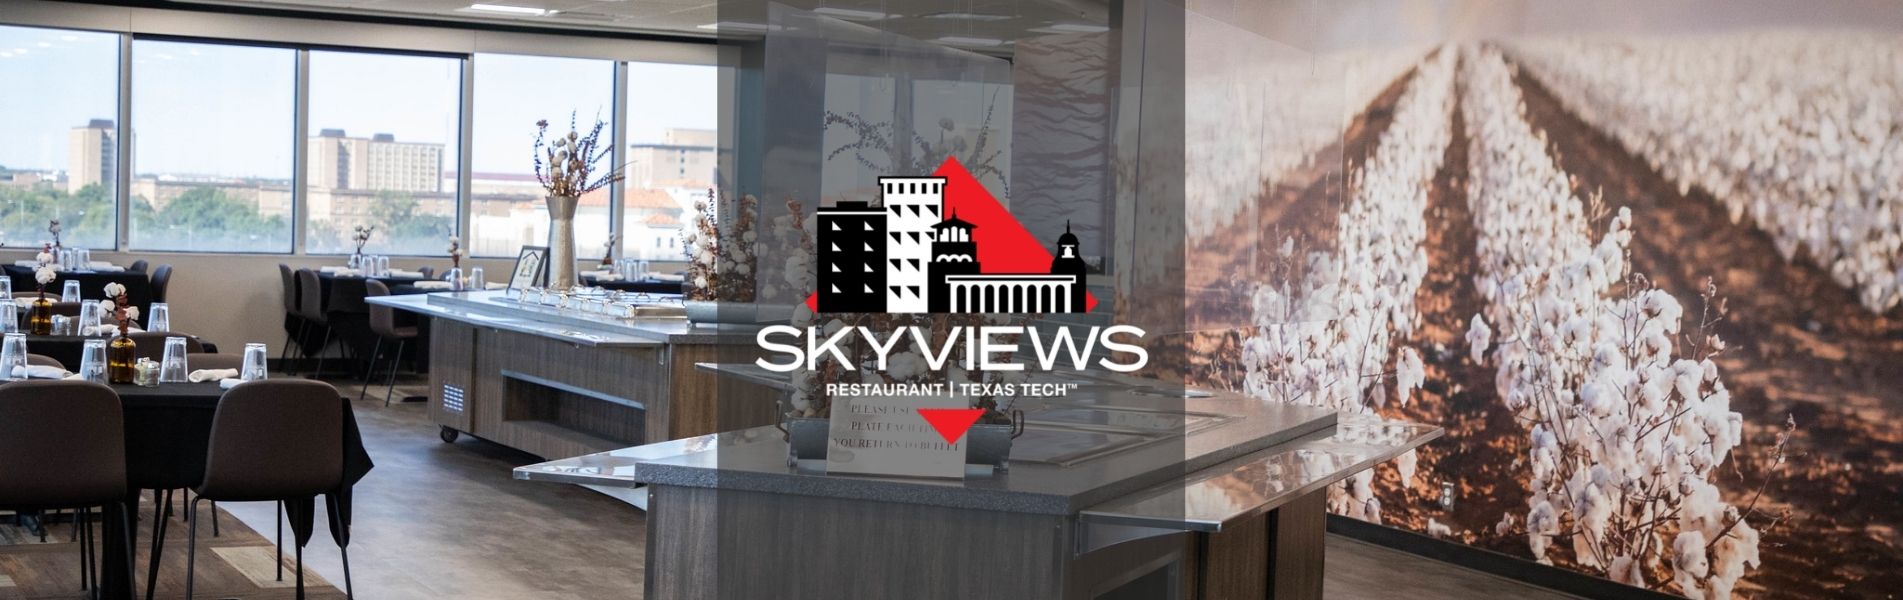 Skyviews Restaurant Lubbock, TX Texas Tech